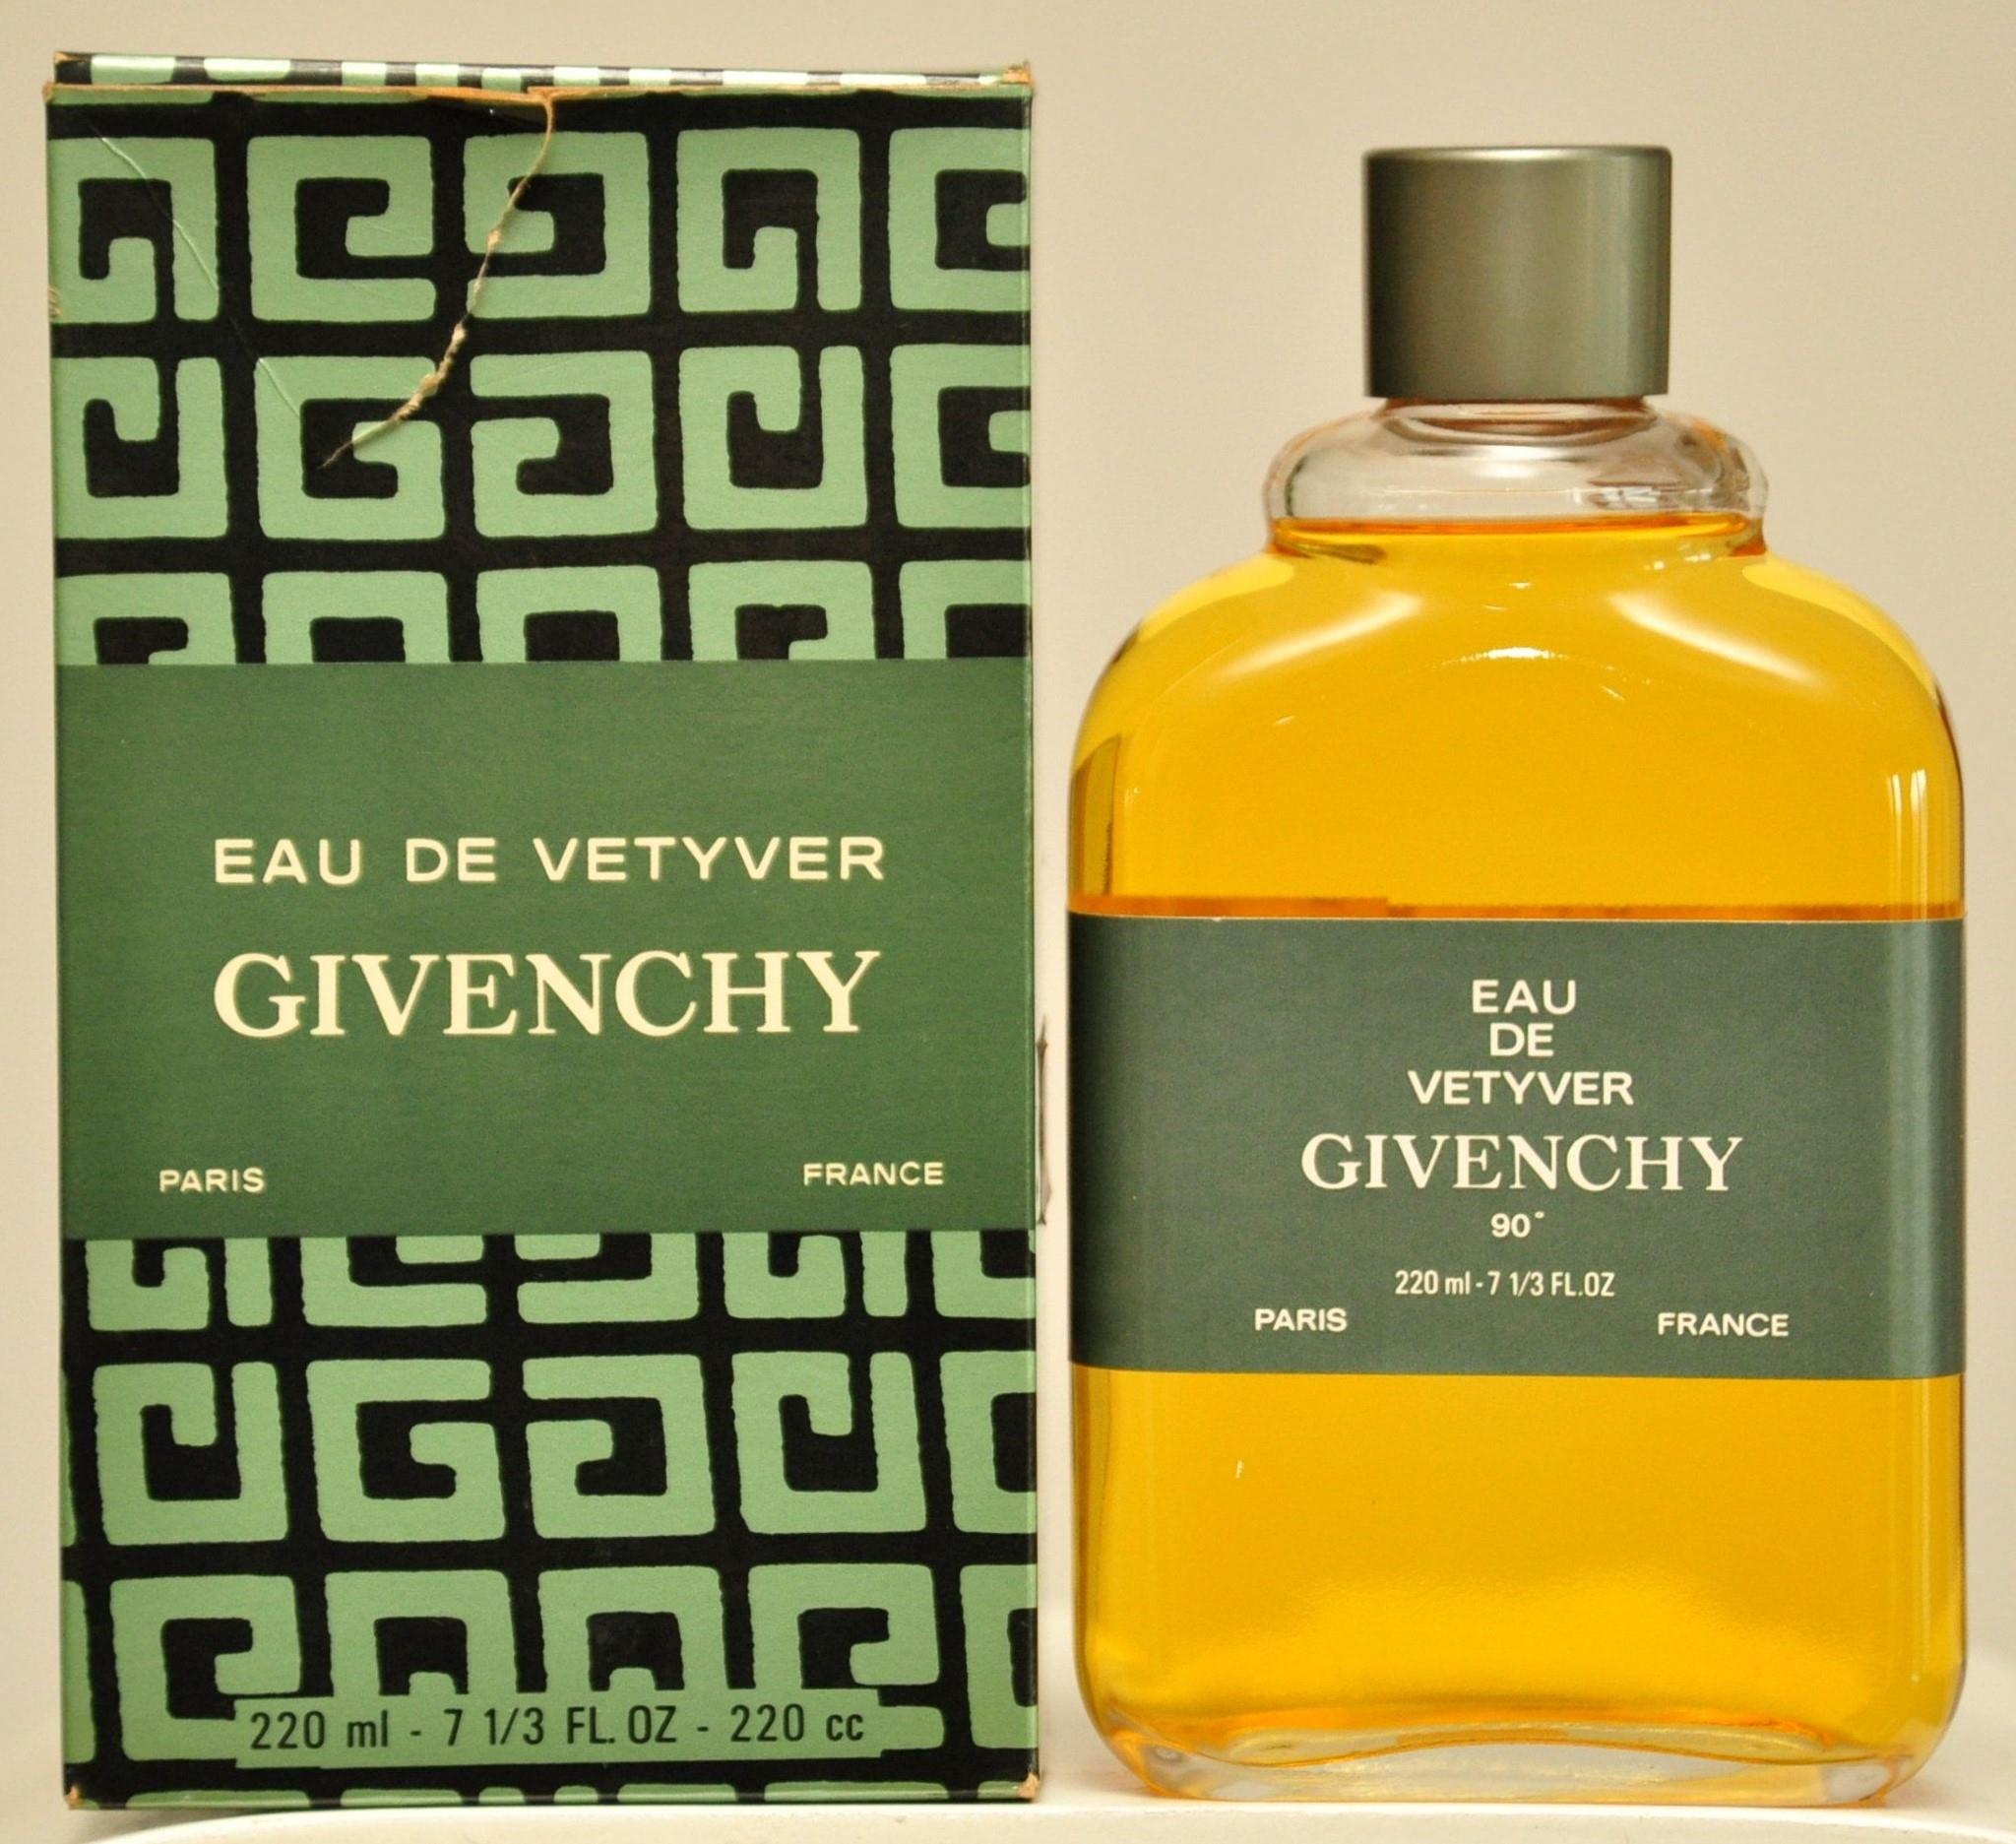 Givenchy Eau de vetyver Original - decanted fragrances & Perfume samples -  The Perfumed Court